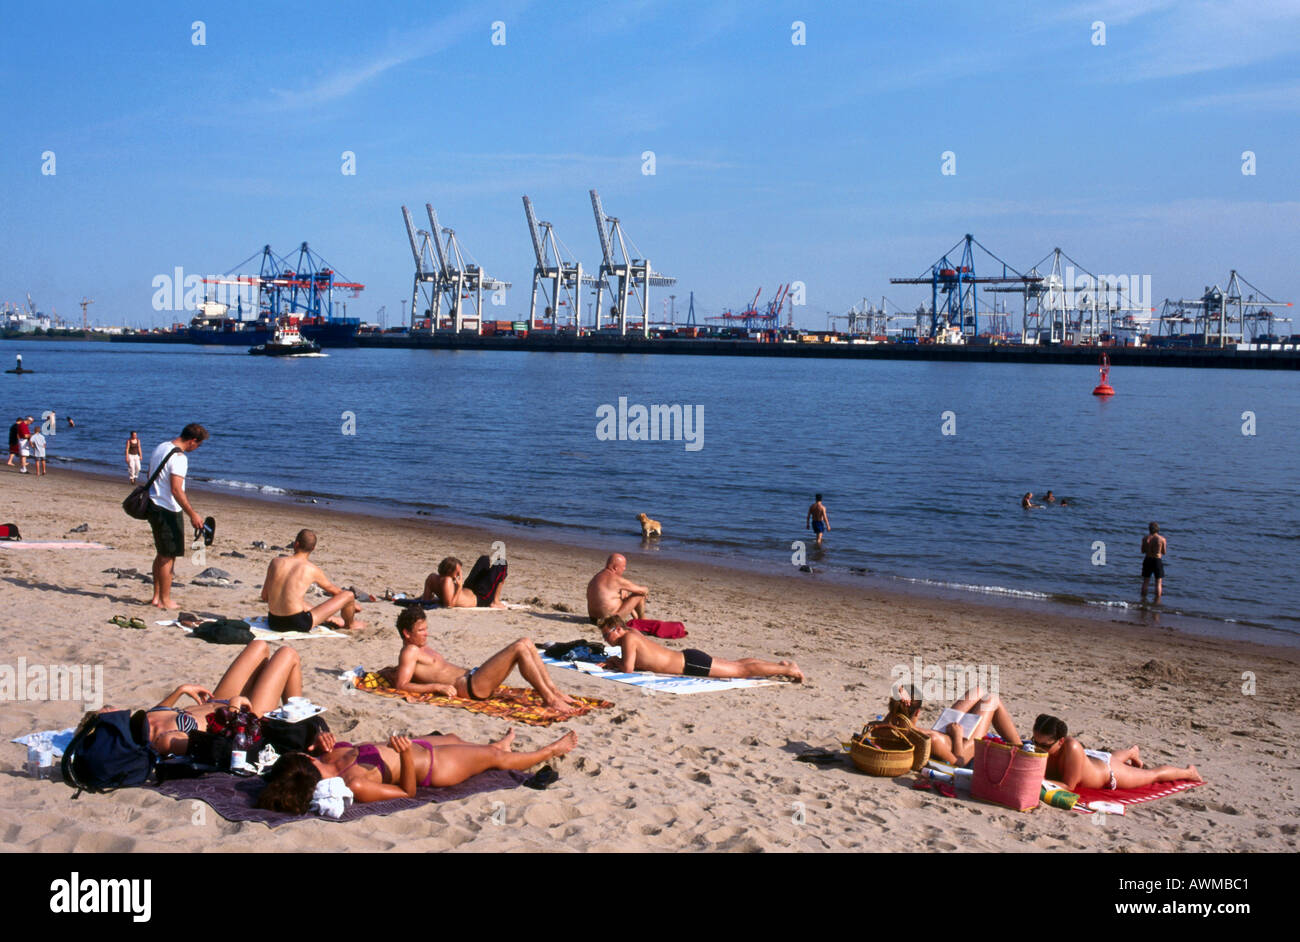 Tourists on beach, Elbe River, Oevelgoenne, Hamburg, Germany Stock Photo